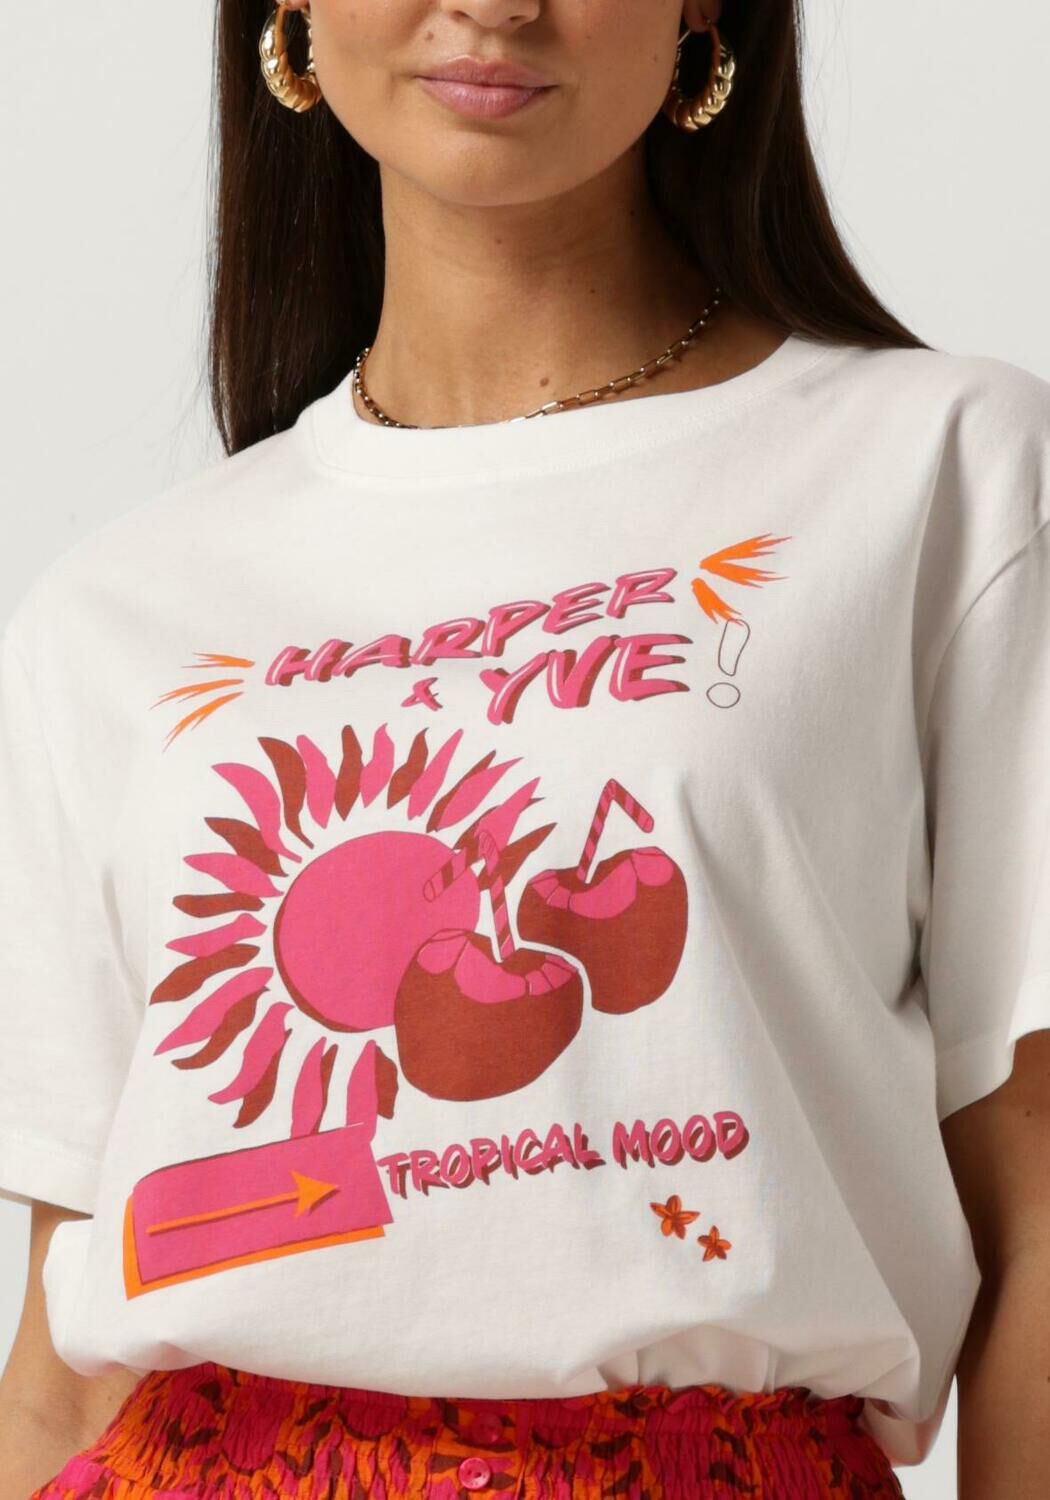 HARPER & YVE Dames Tops & T-shirts Tropical-ss Ecru